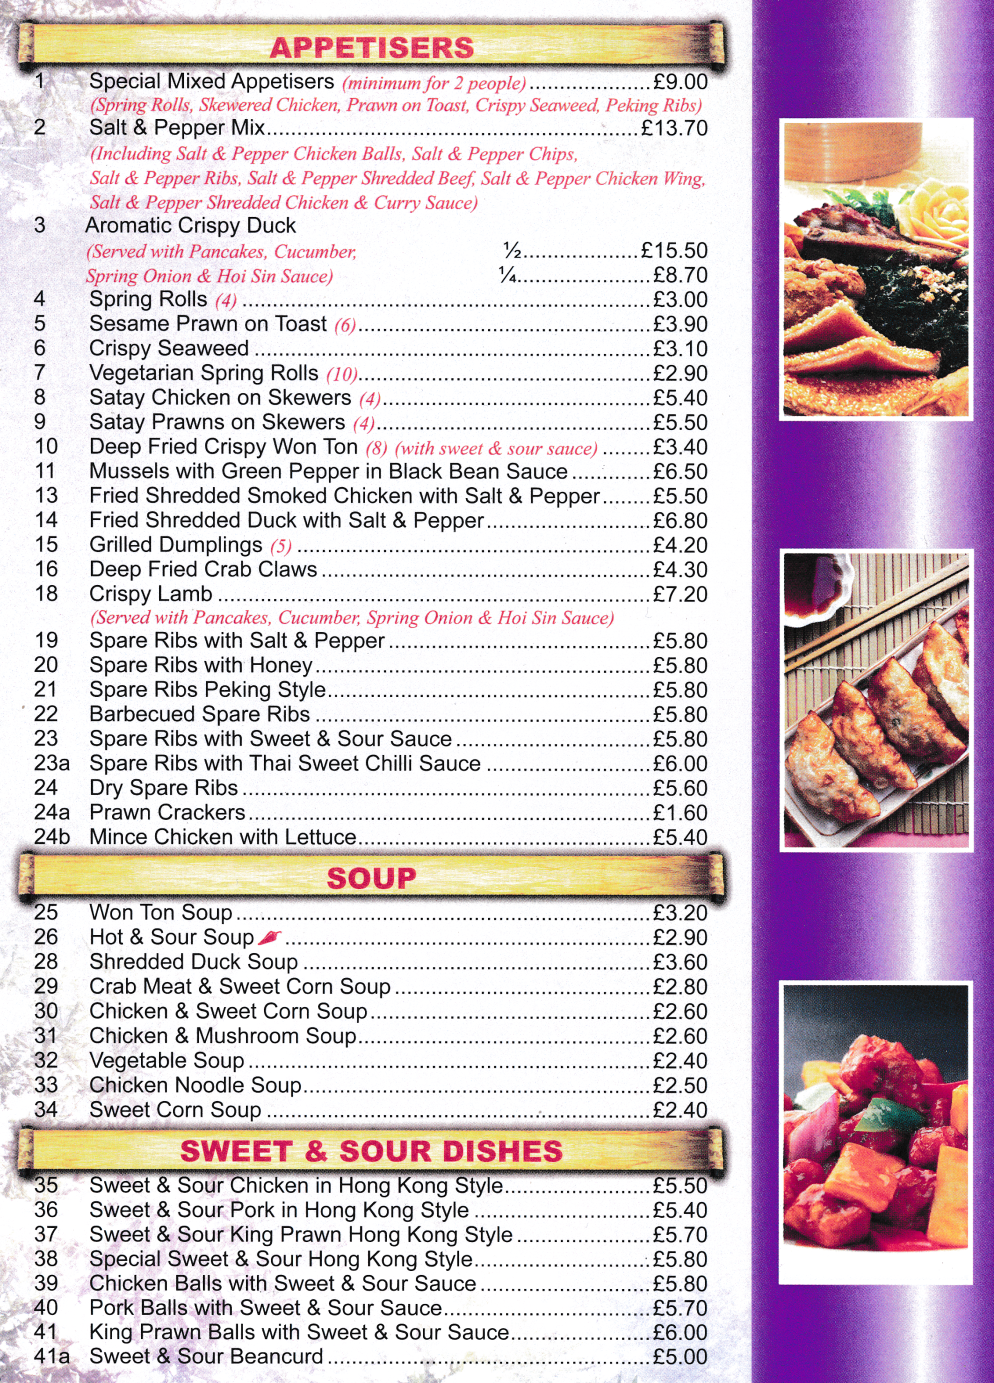 Takeaway menu for Shangri-La - Aromatic Crispy Duck, Spring Rolls, Sesame Prawn on Toast, Sweet & Sour Pork Balls, Barbequed Spare Ribs..